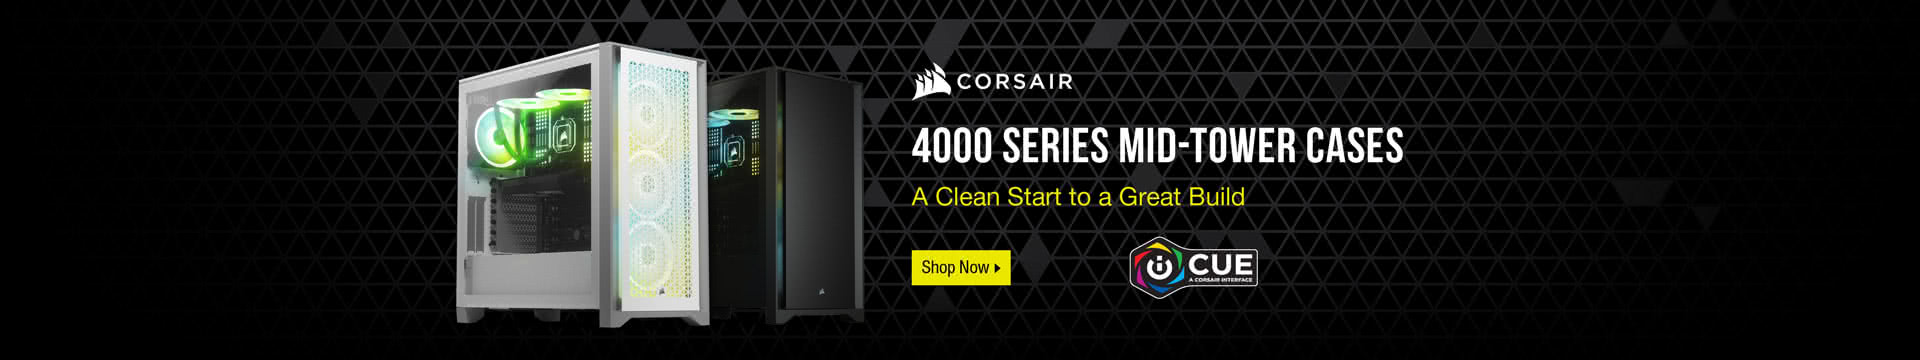 Corsair 4000 Series